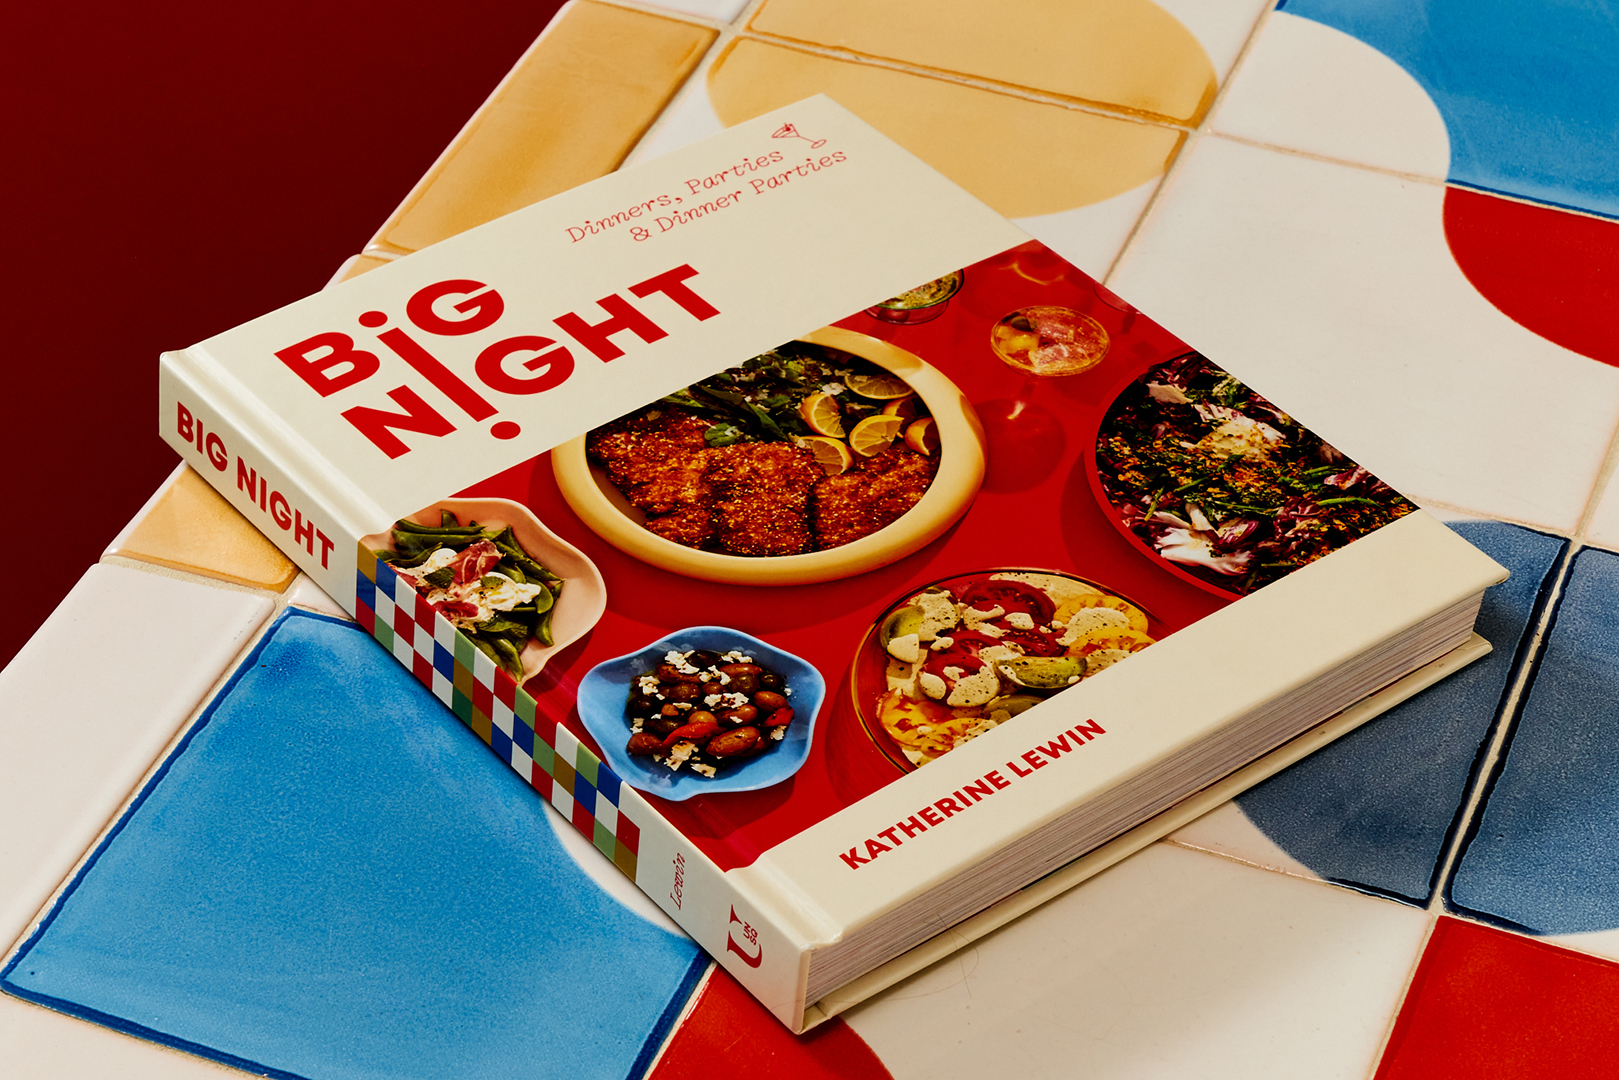 Big Night book on colorful countertop